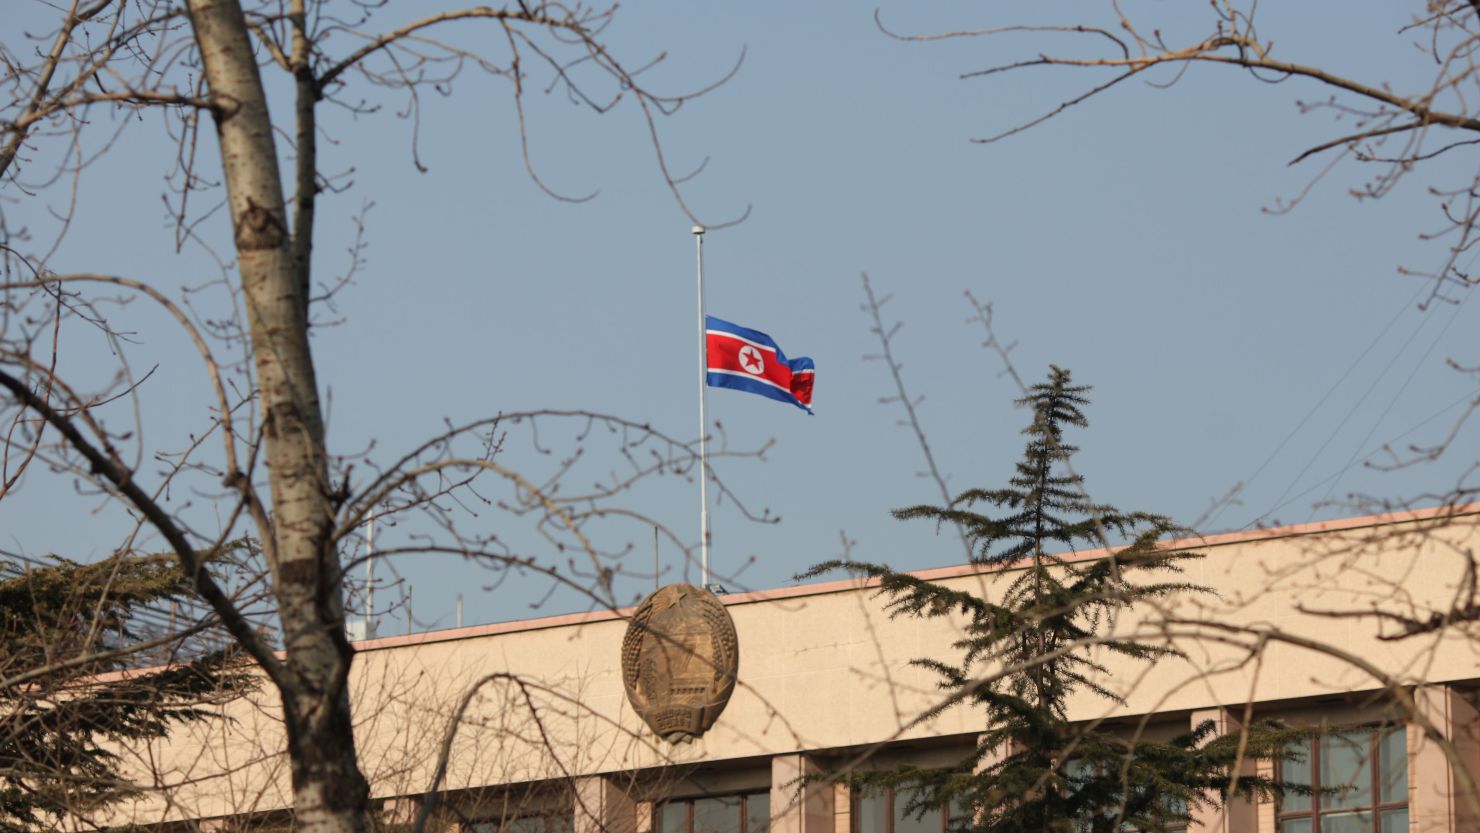 The North Korean flag flies at half-mast above the North Korean embassy in Beijing on December 19, 2011.